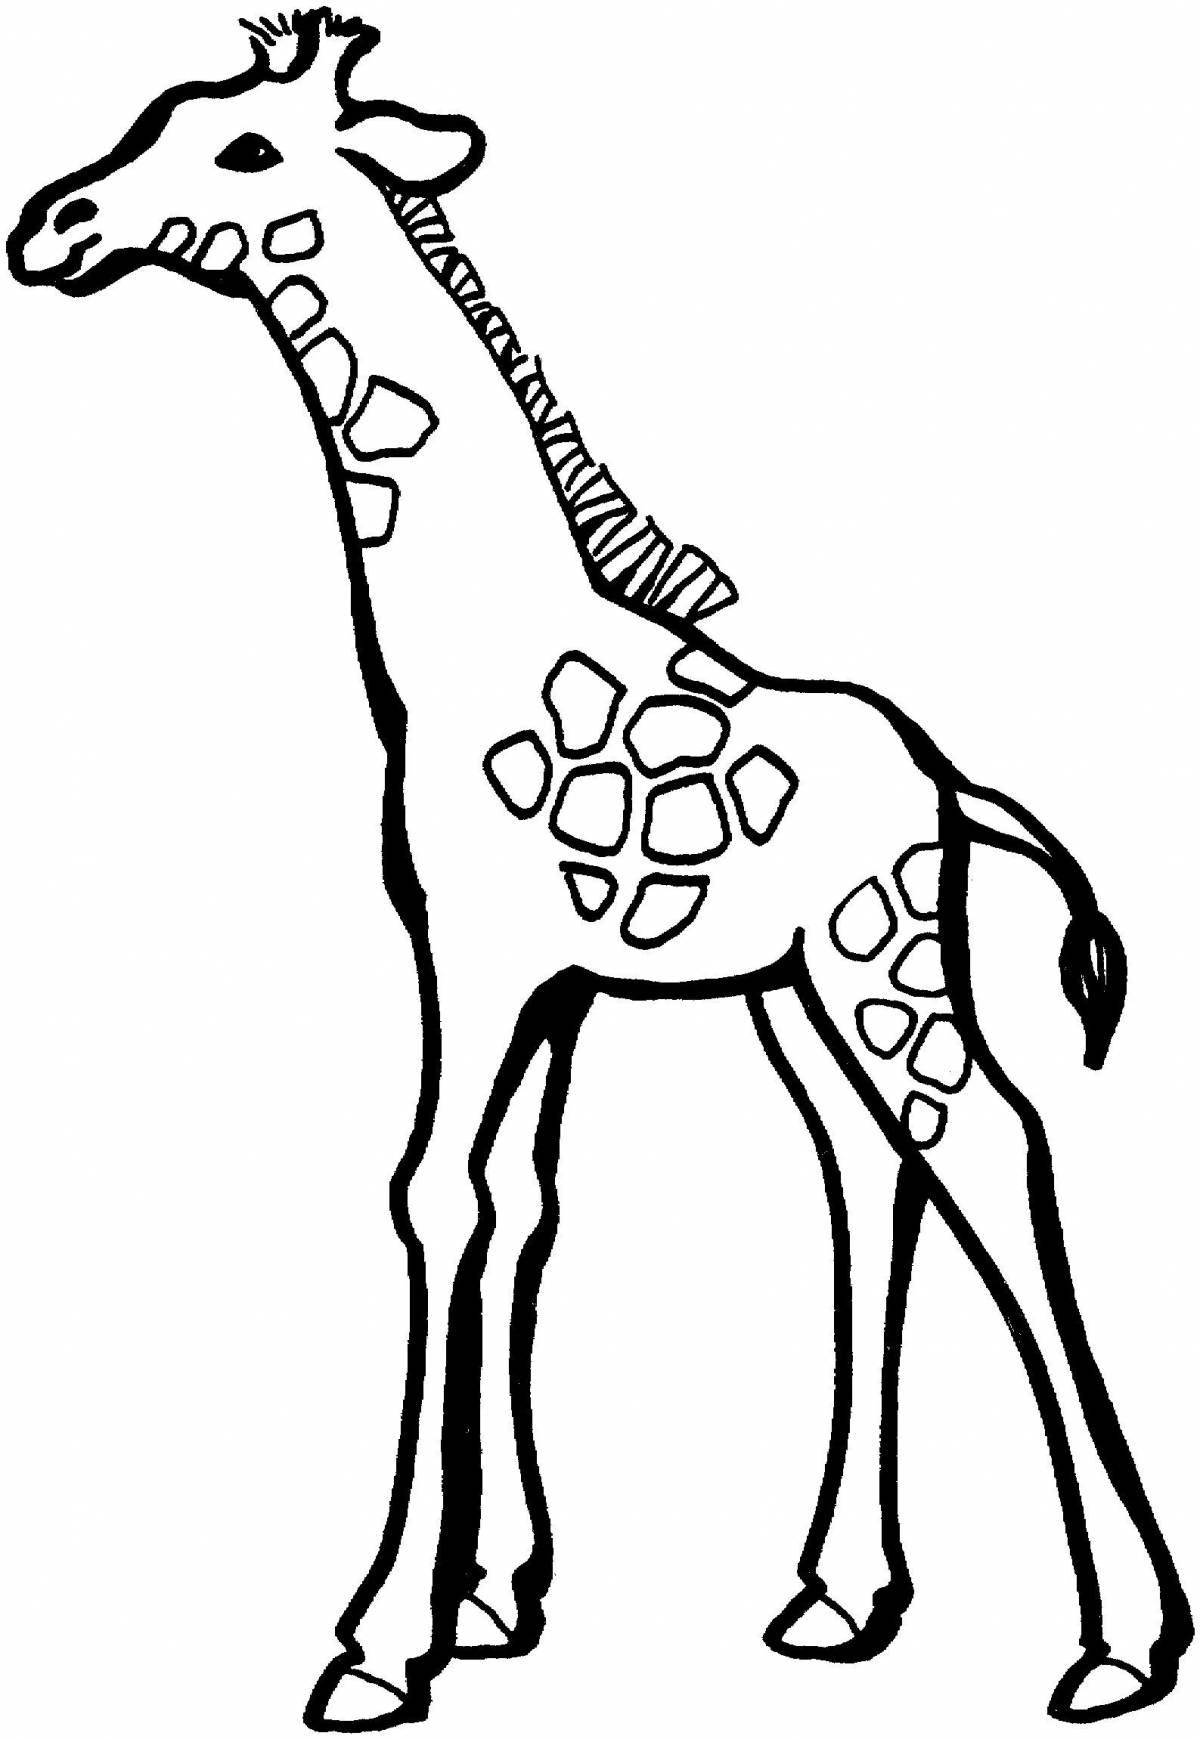 Fun coloring giraffe for kids